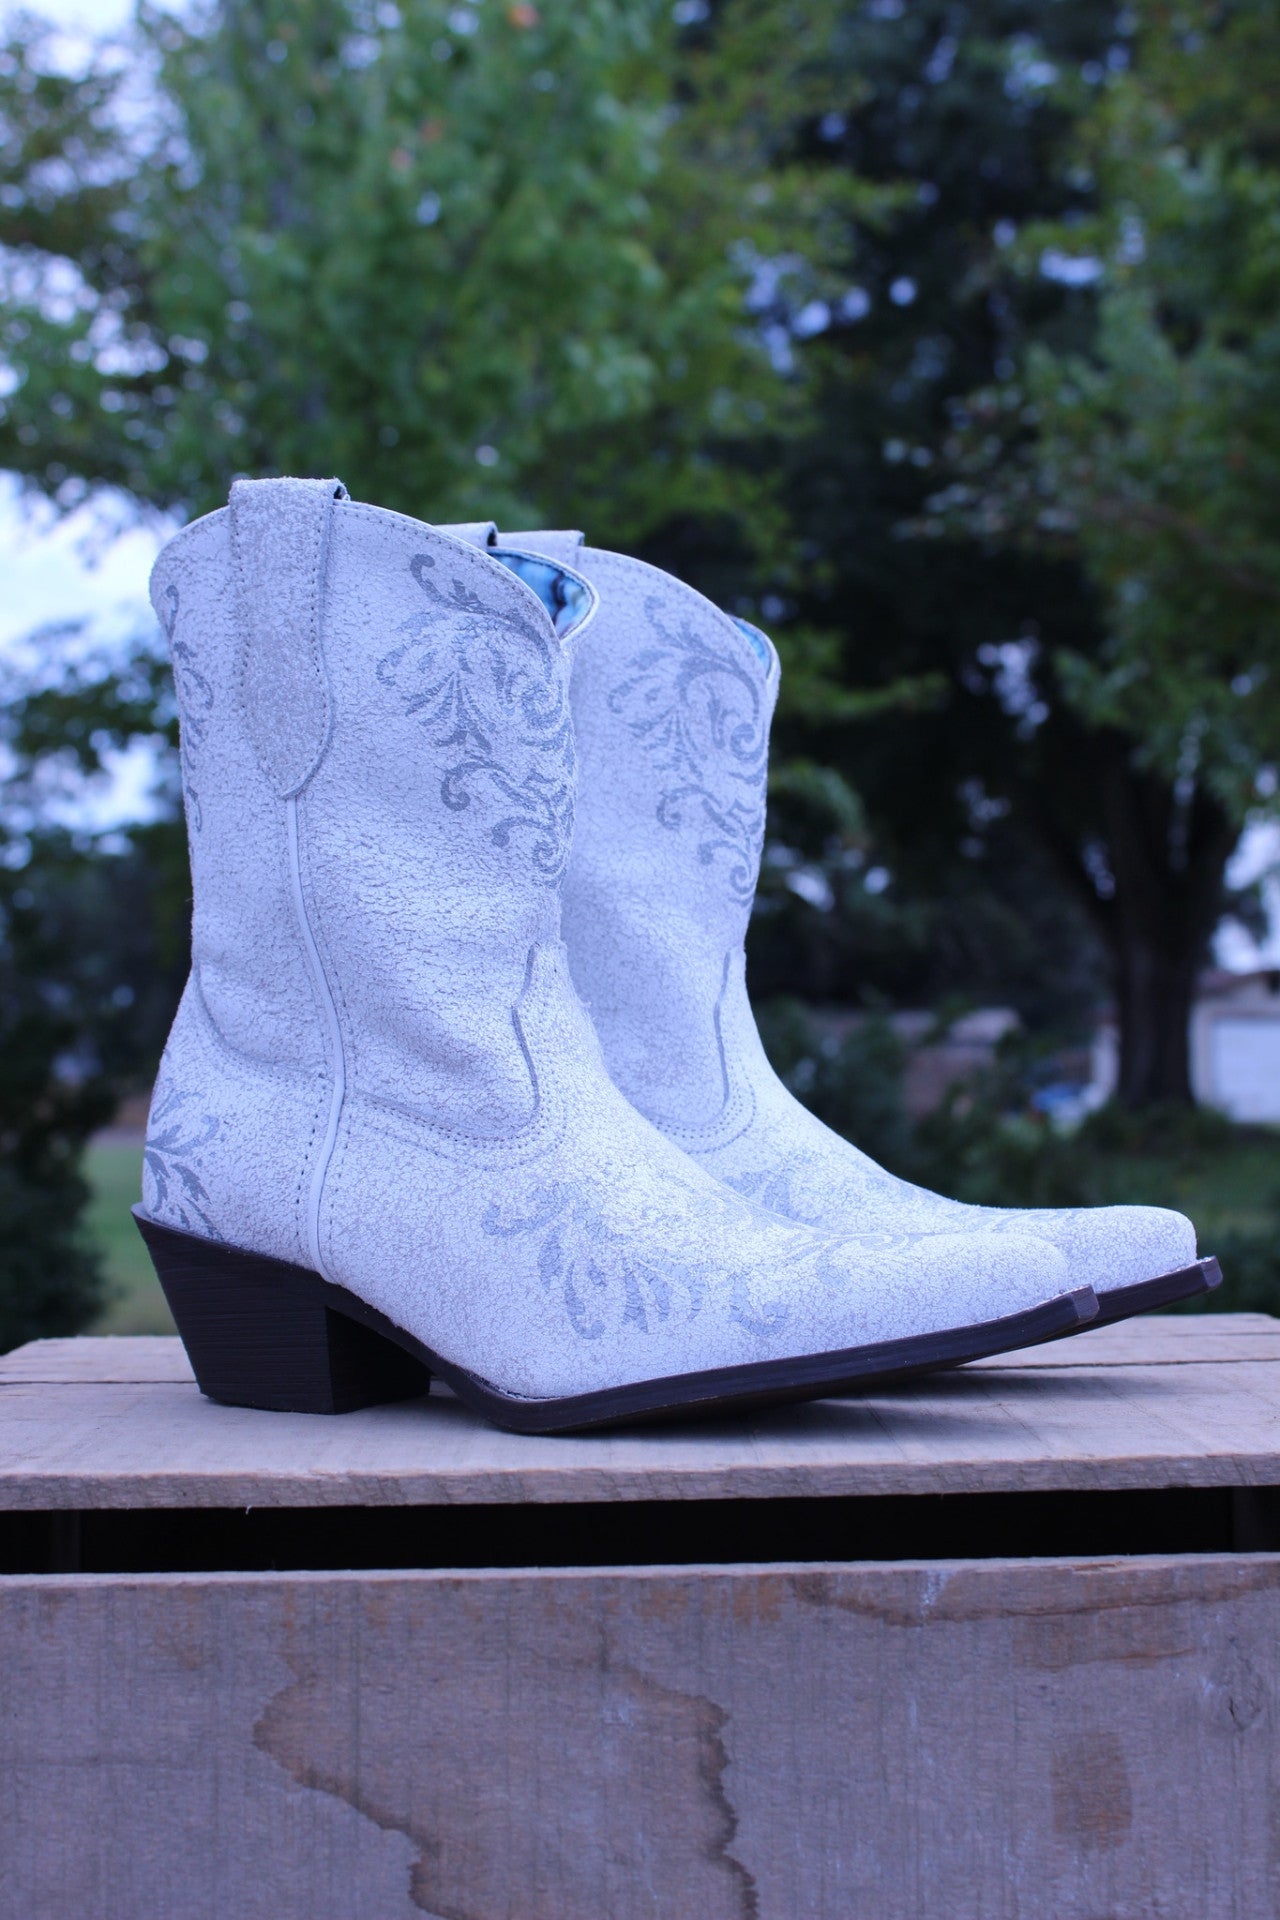 Laredo: Medallion Boot, White